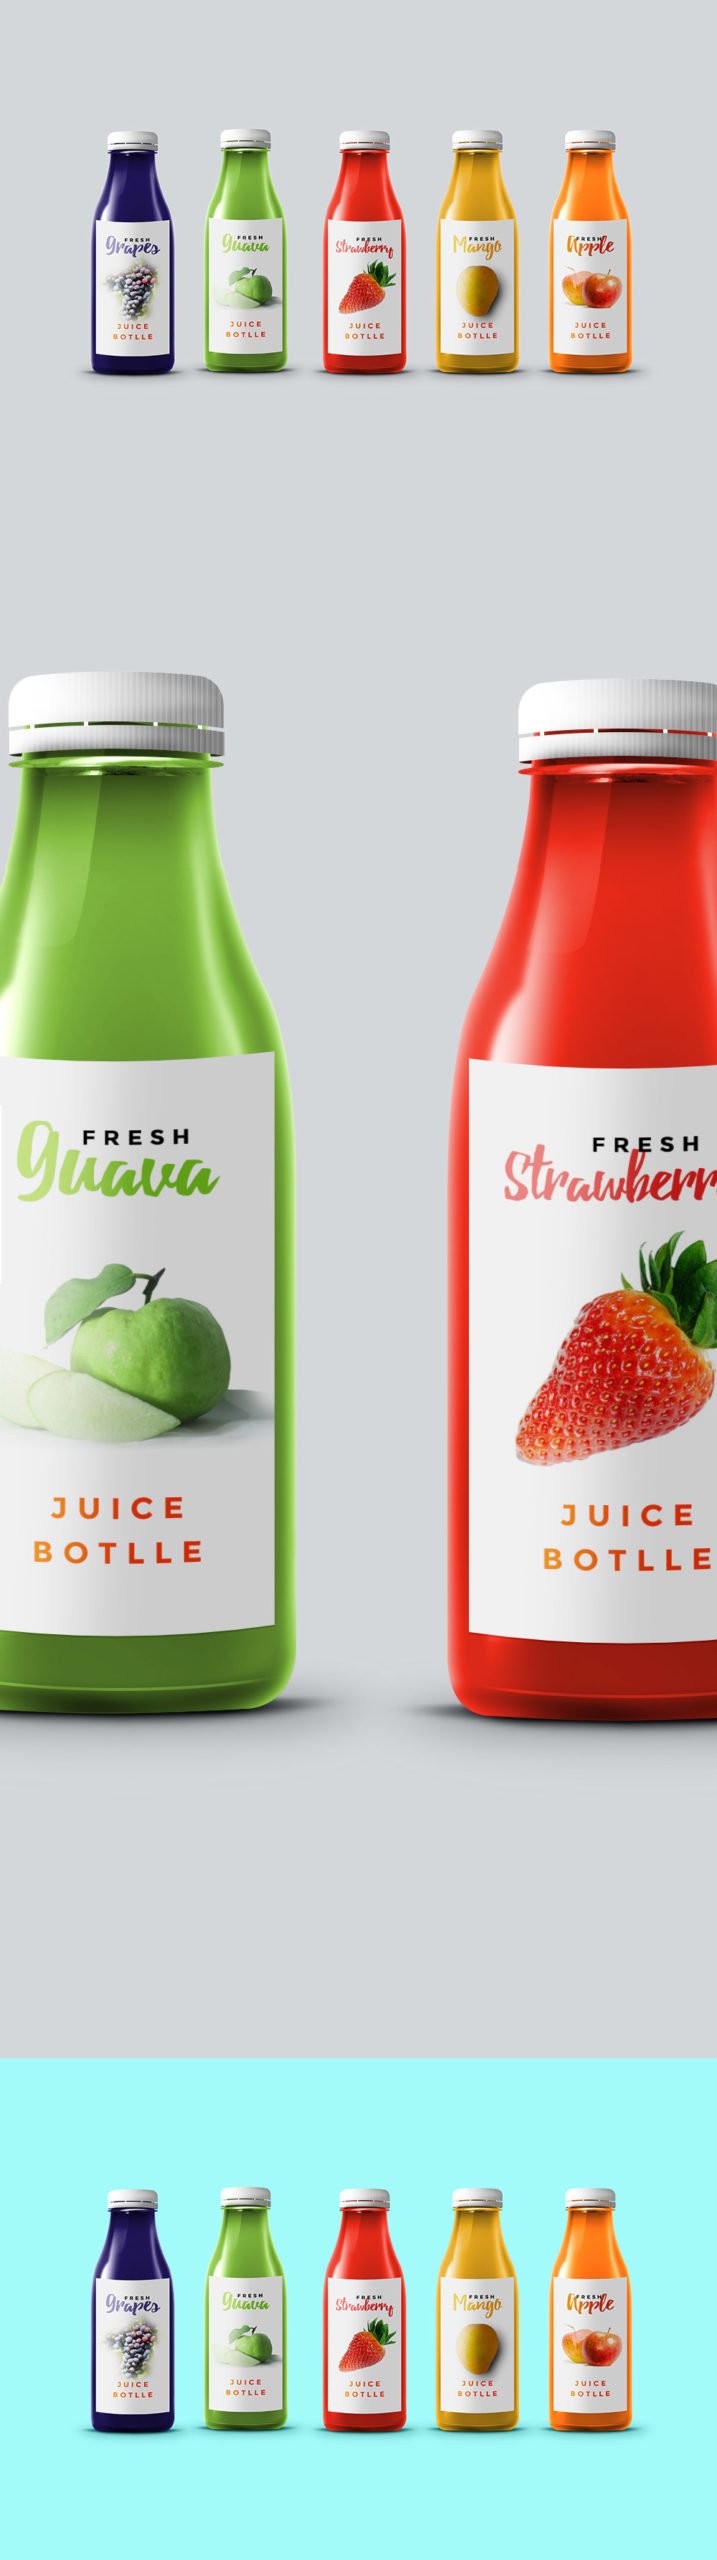 5 juice bottles mockup in PSD format